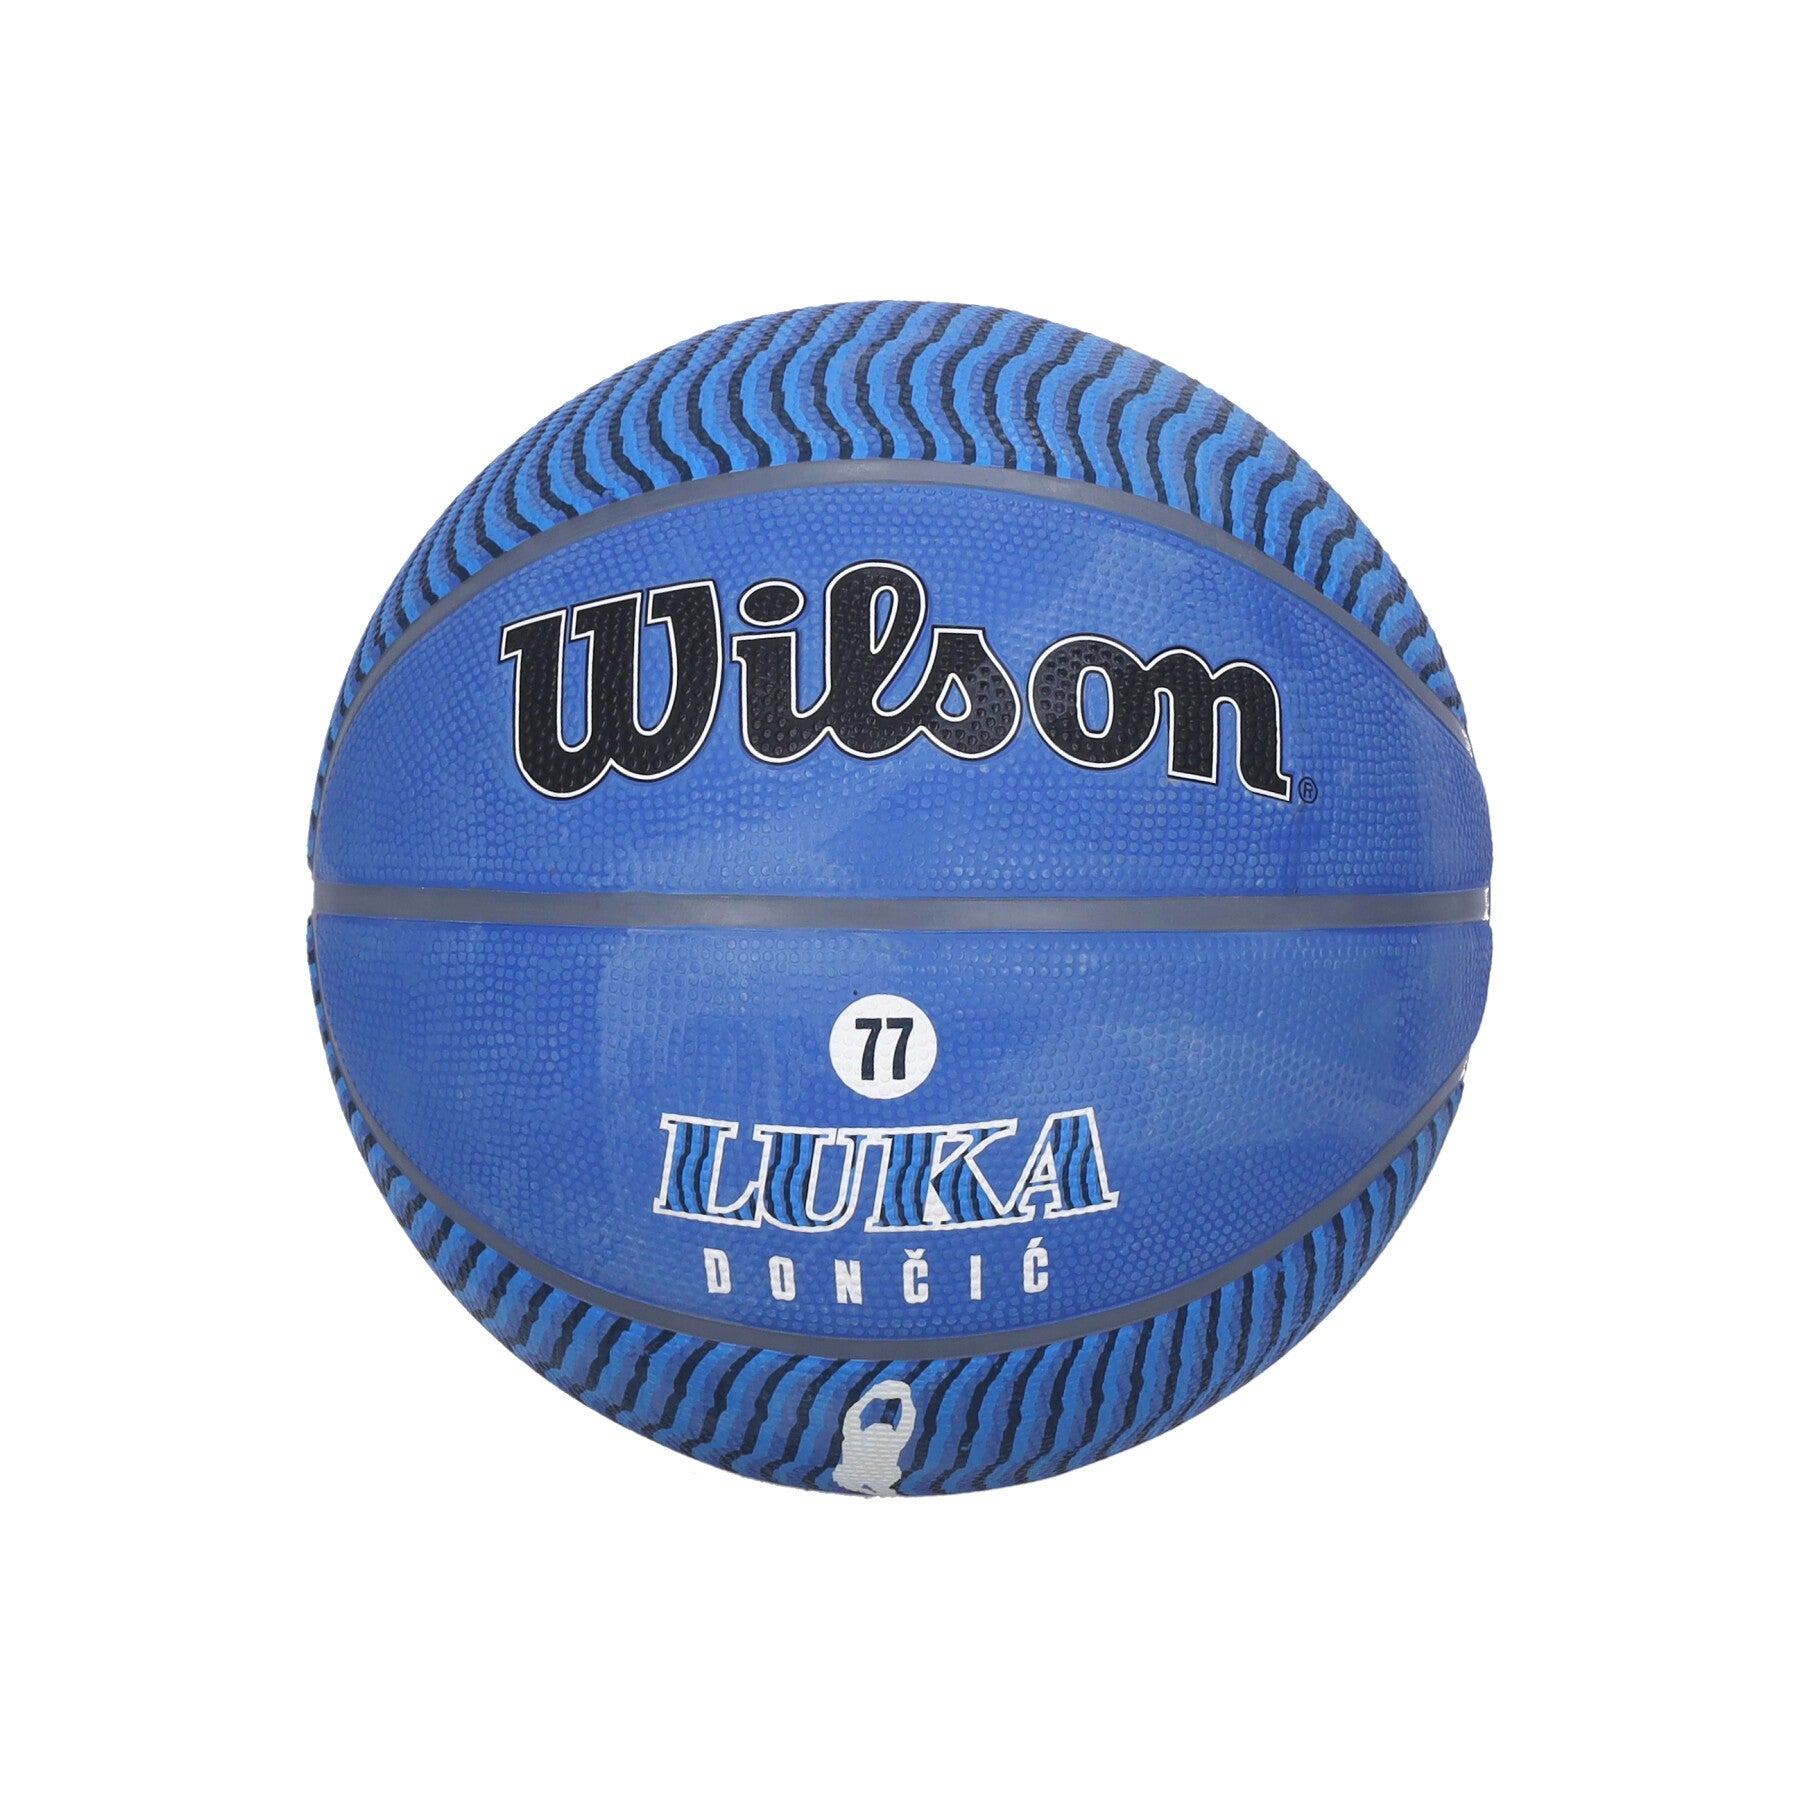 Men's NBA Luka Doncic Icon Outdoor Basketball Size 7 Blue